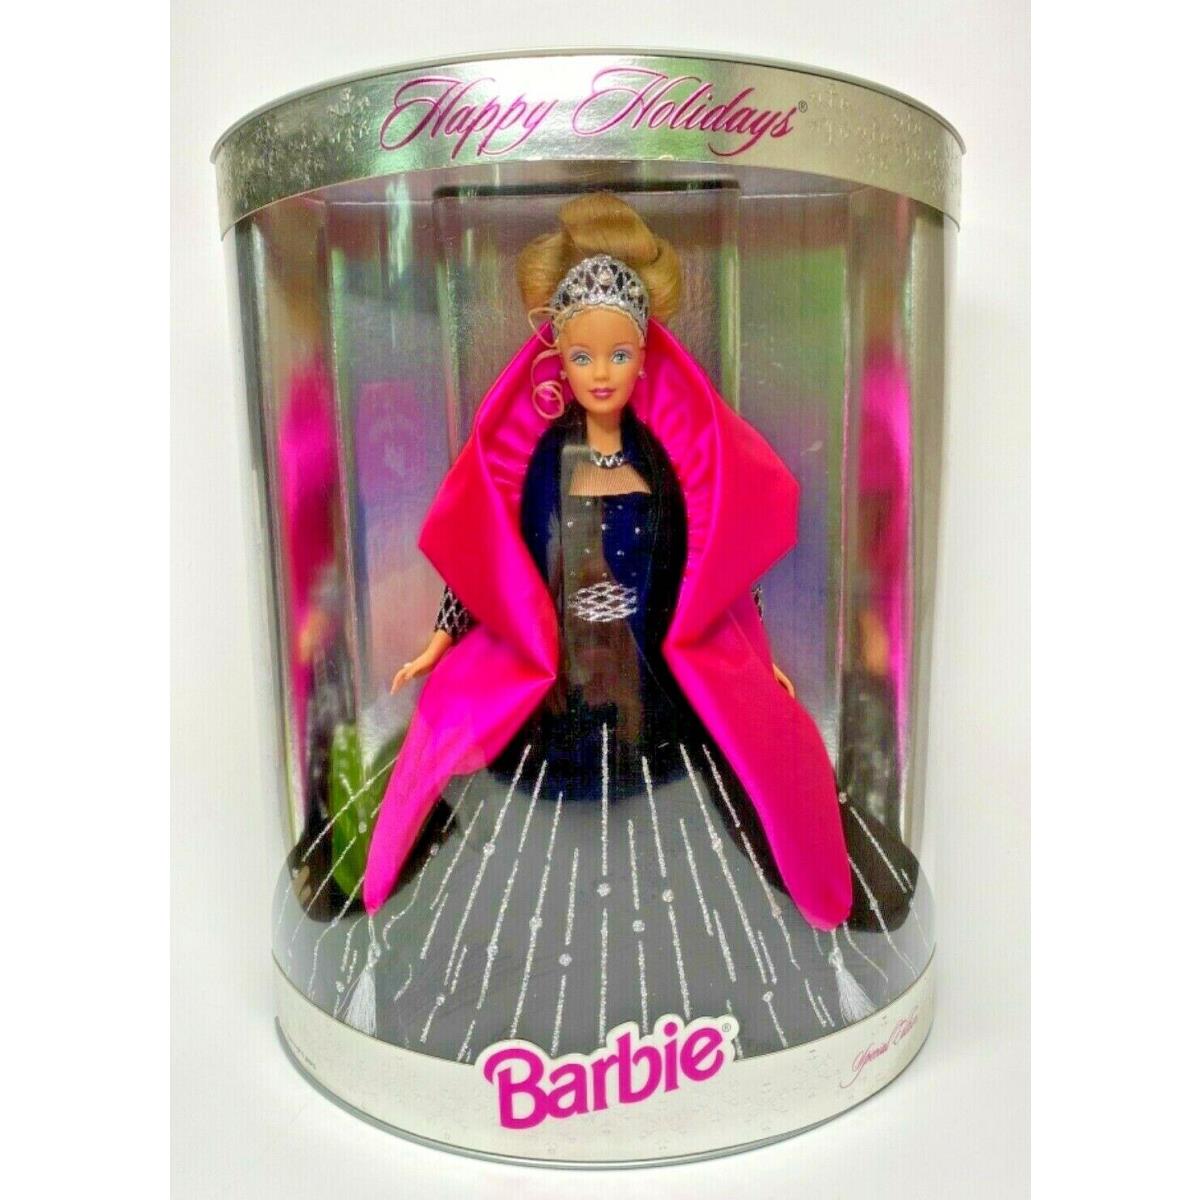 1998 Barbie Happy Holidays Doll with Rare Misprint 5